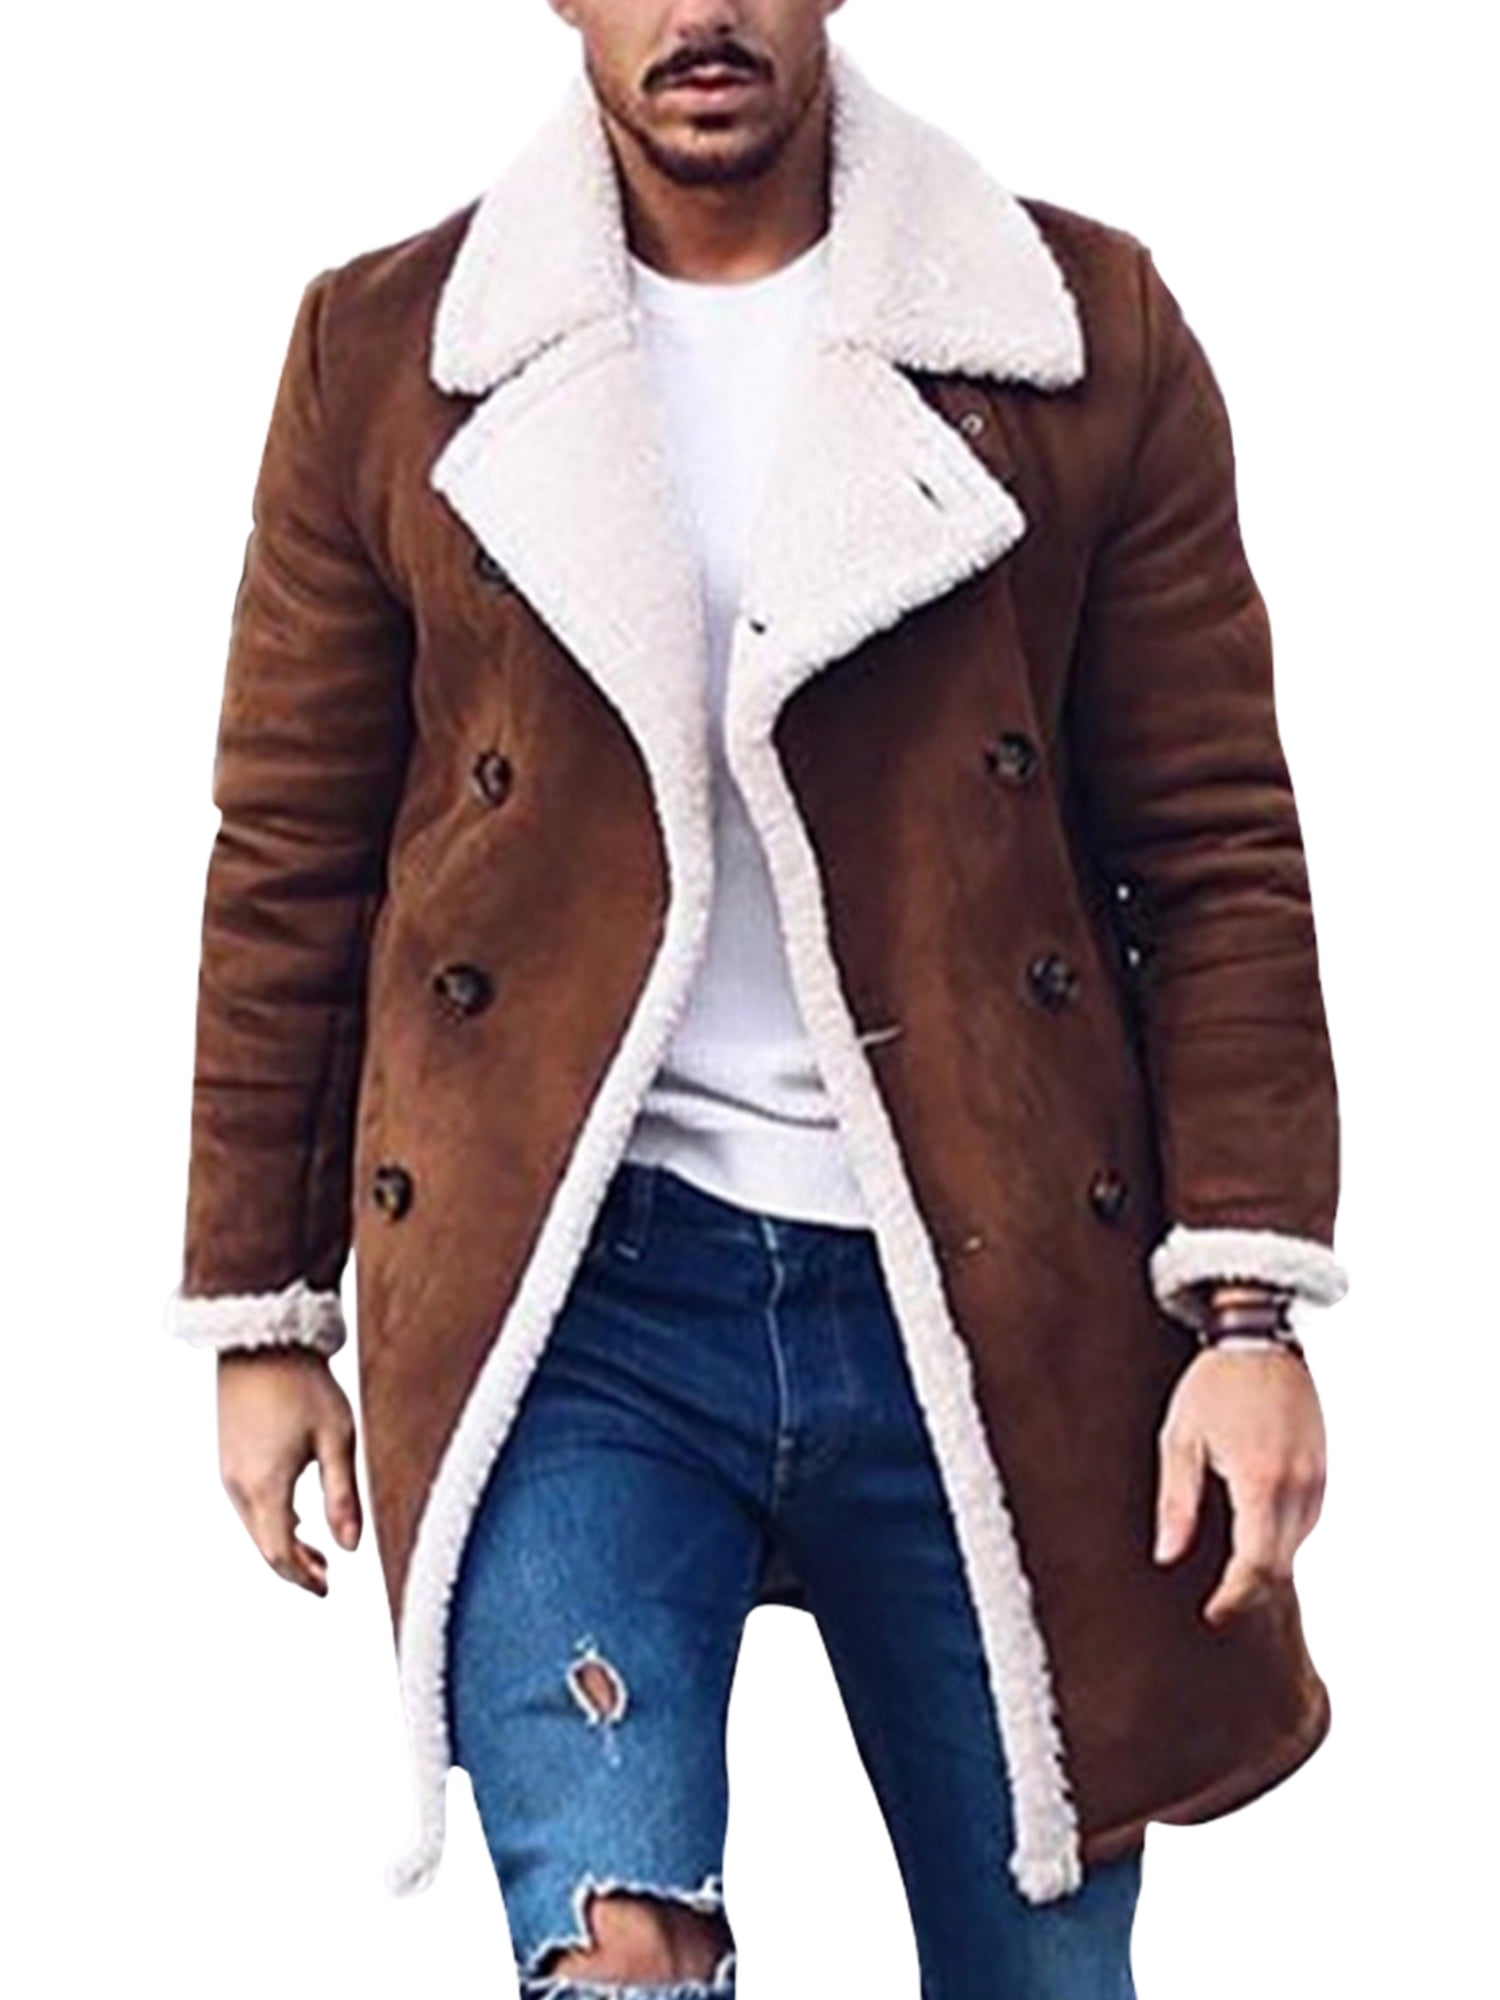 Mens Double Breasted Overcoat Long Jacket Outwear Winter Warm Wool Trench Coat